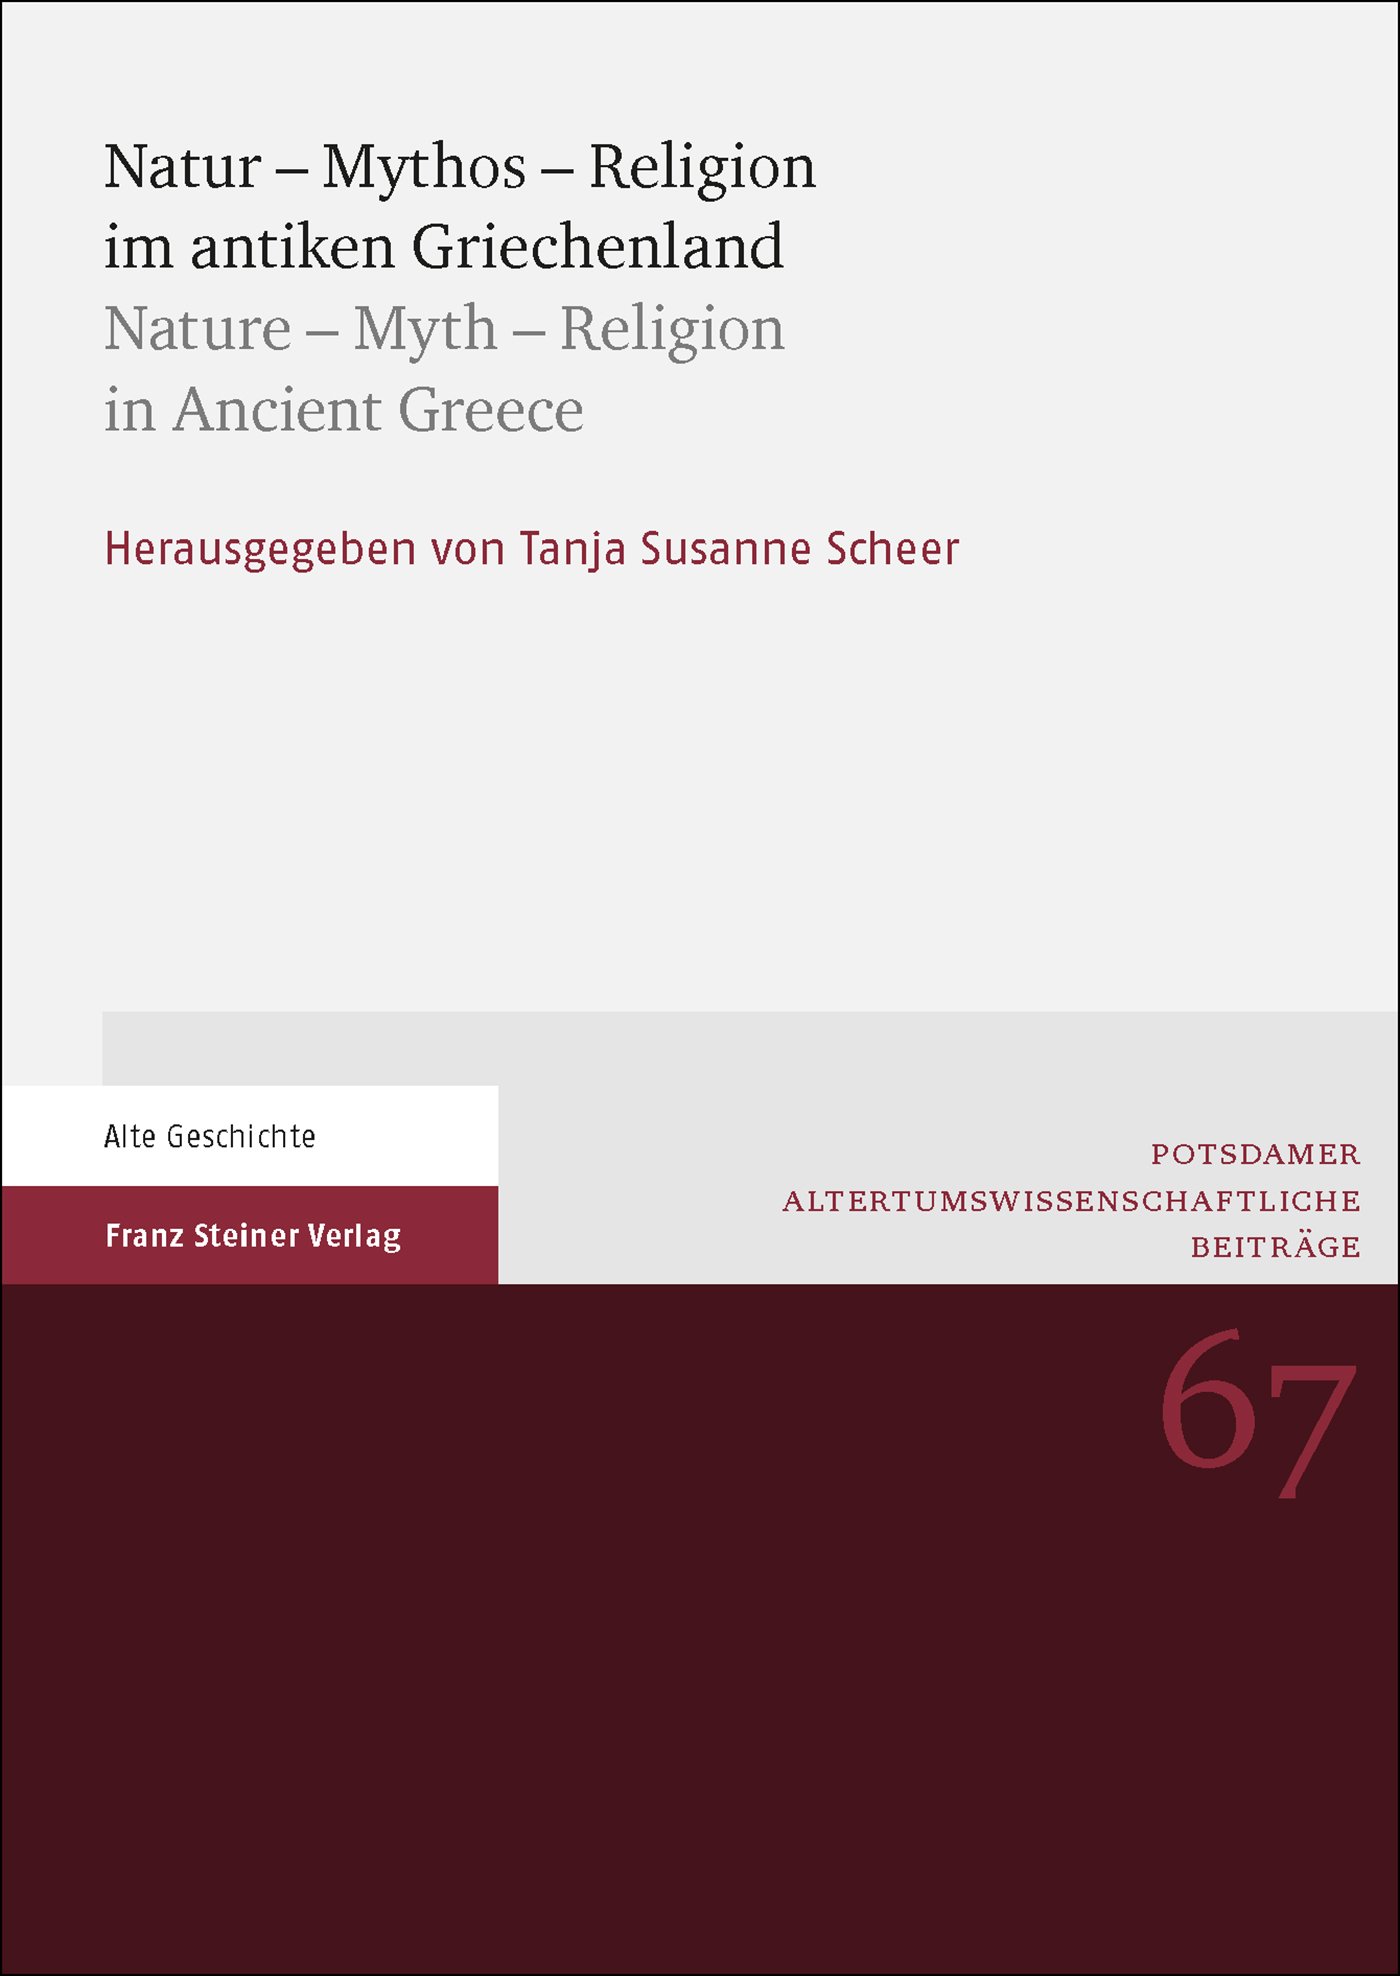 Natur – Mythos – Religion im antiken Griechenland / Nature – Myth – Religion in Ancient Greece